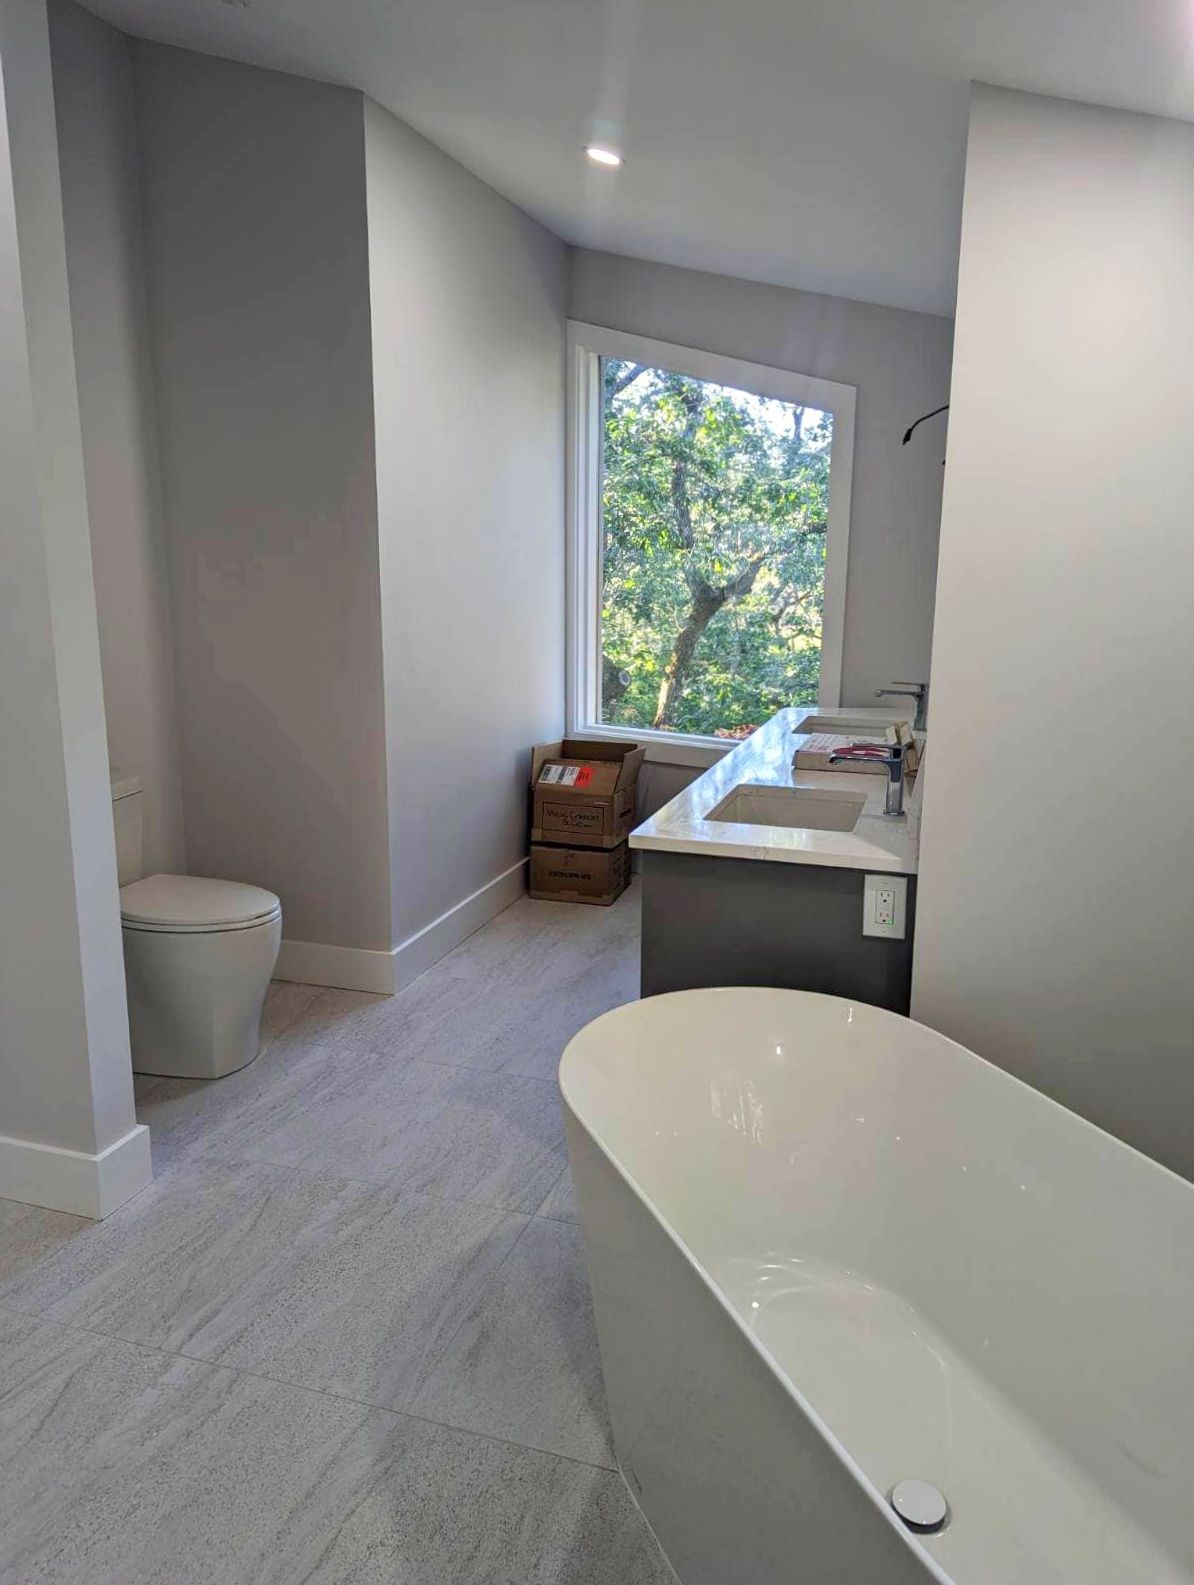 Light gray bathroom with an oversized porcelain tub.